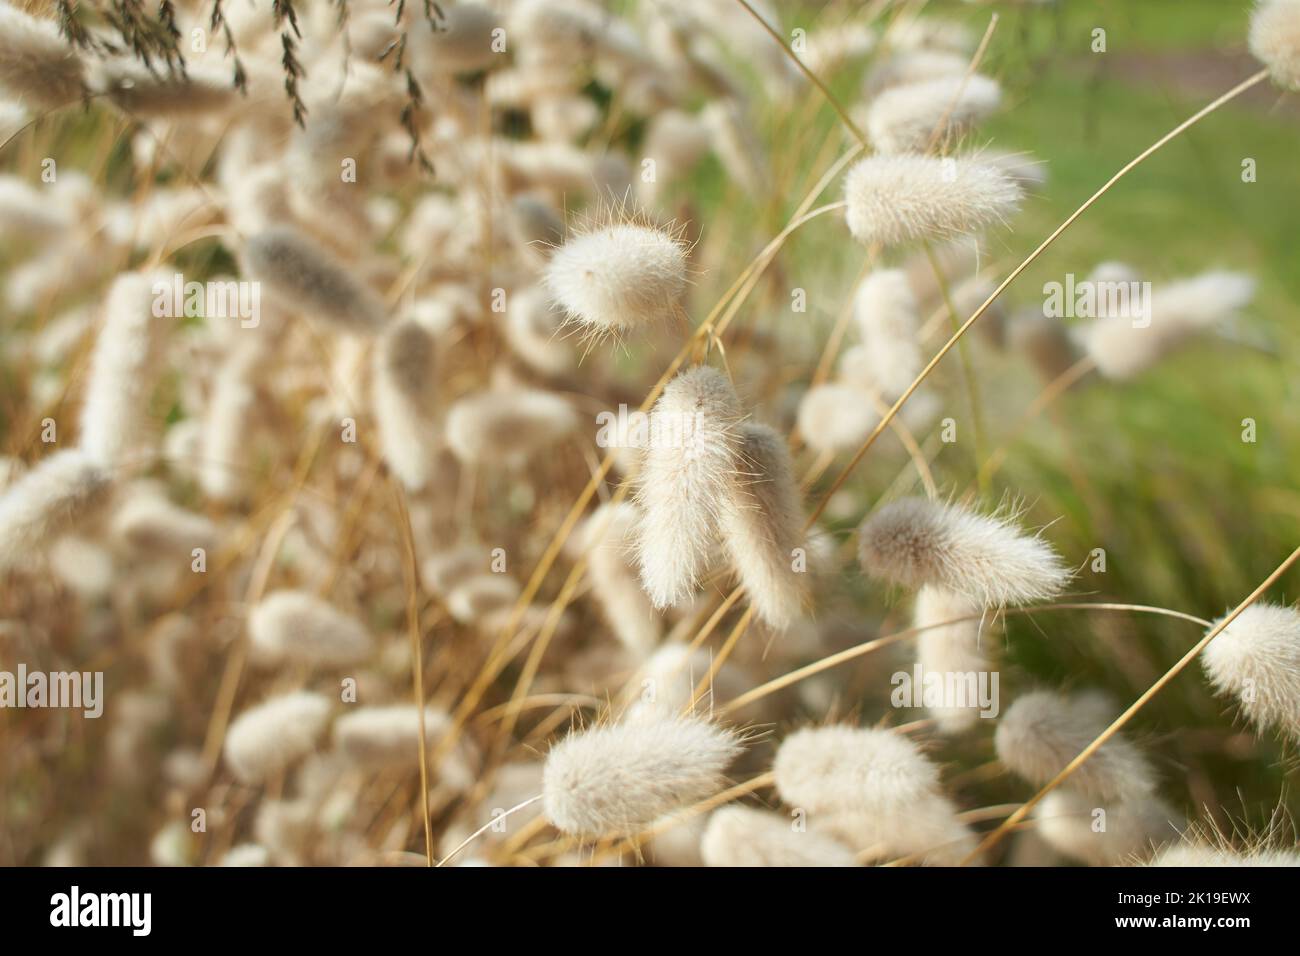 20 x Rabbit Tail Grass Bunny Tails Dried Flowers Lagurus Ovatus Plant Stems  UK